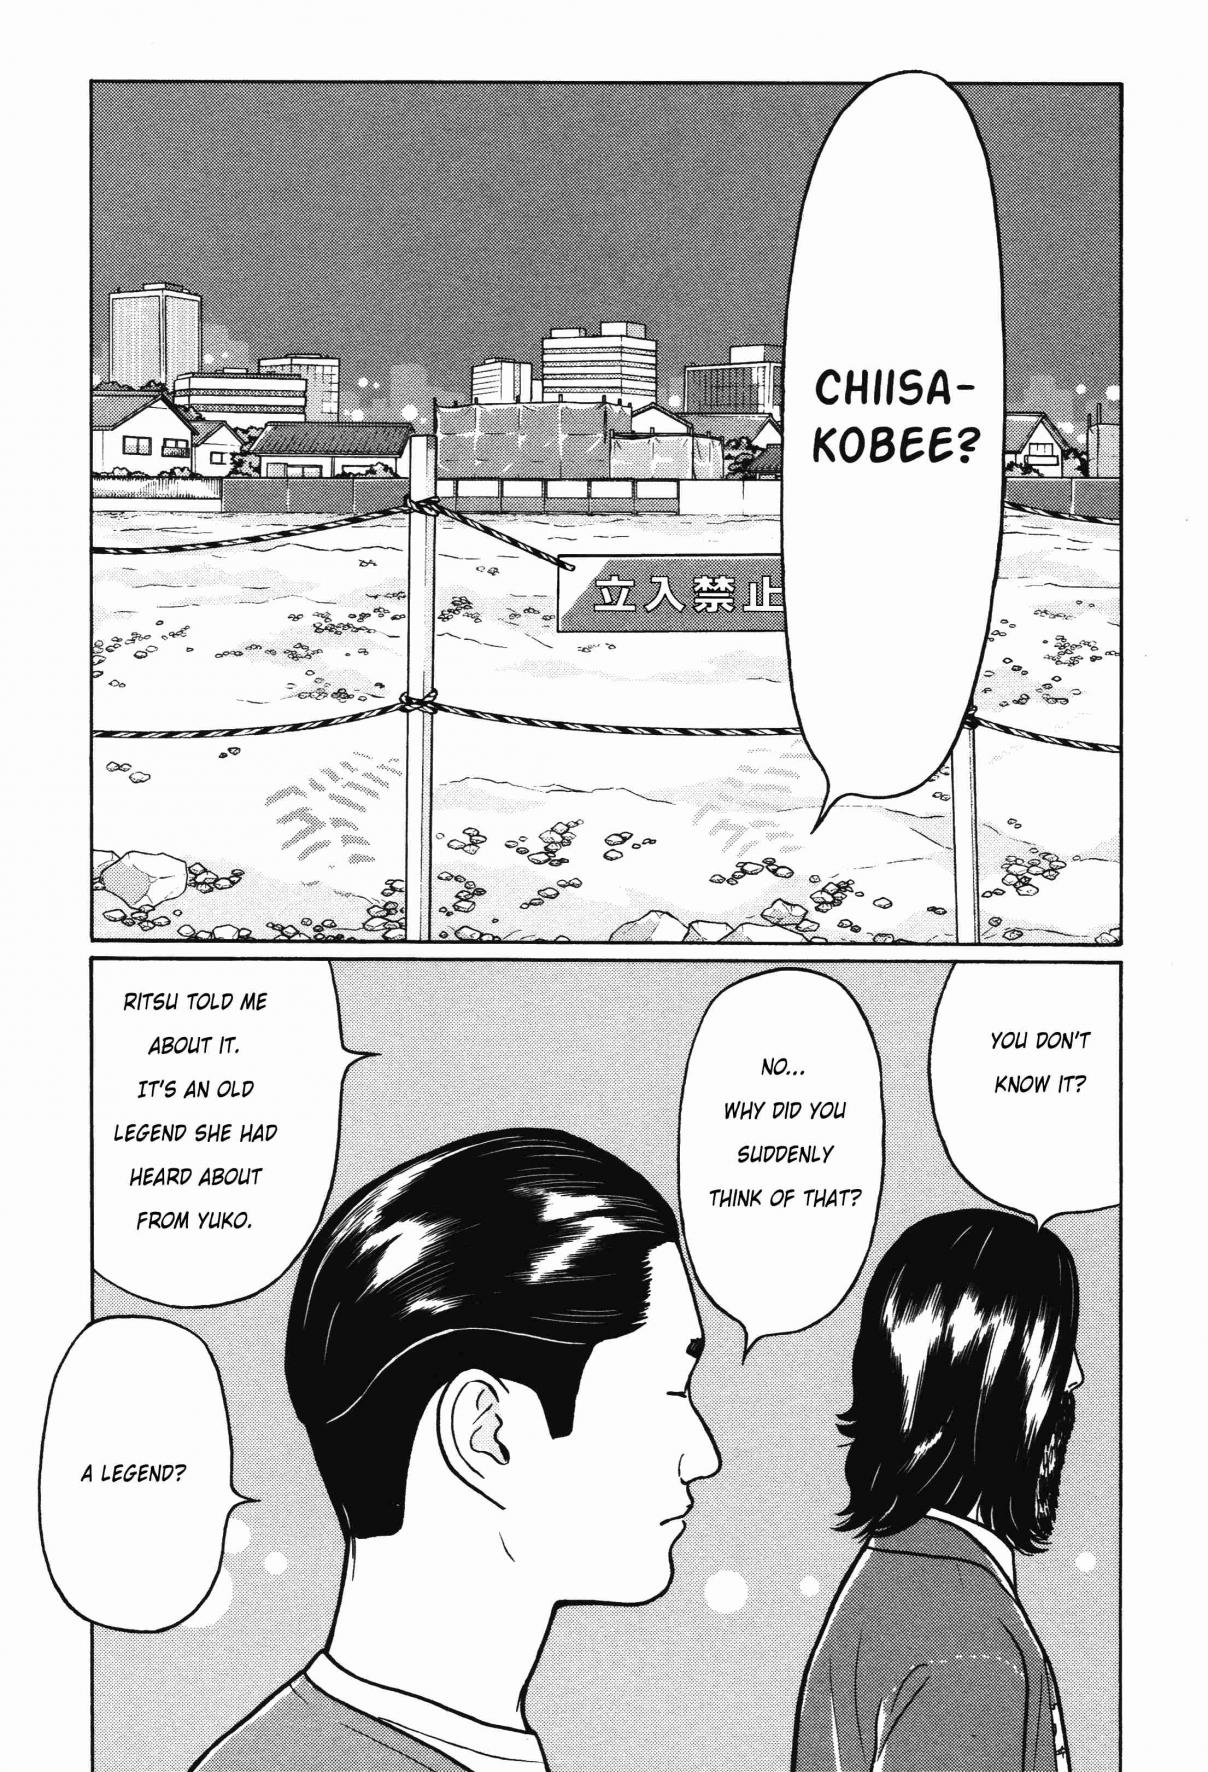 Chiisakobee Vol. 2 Ch. 10